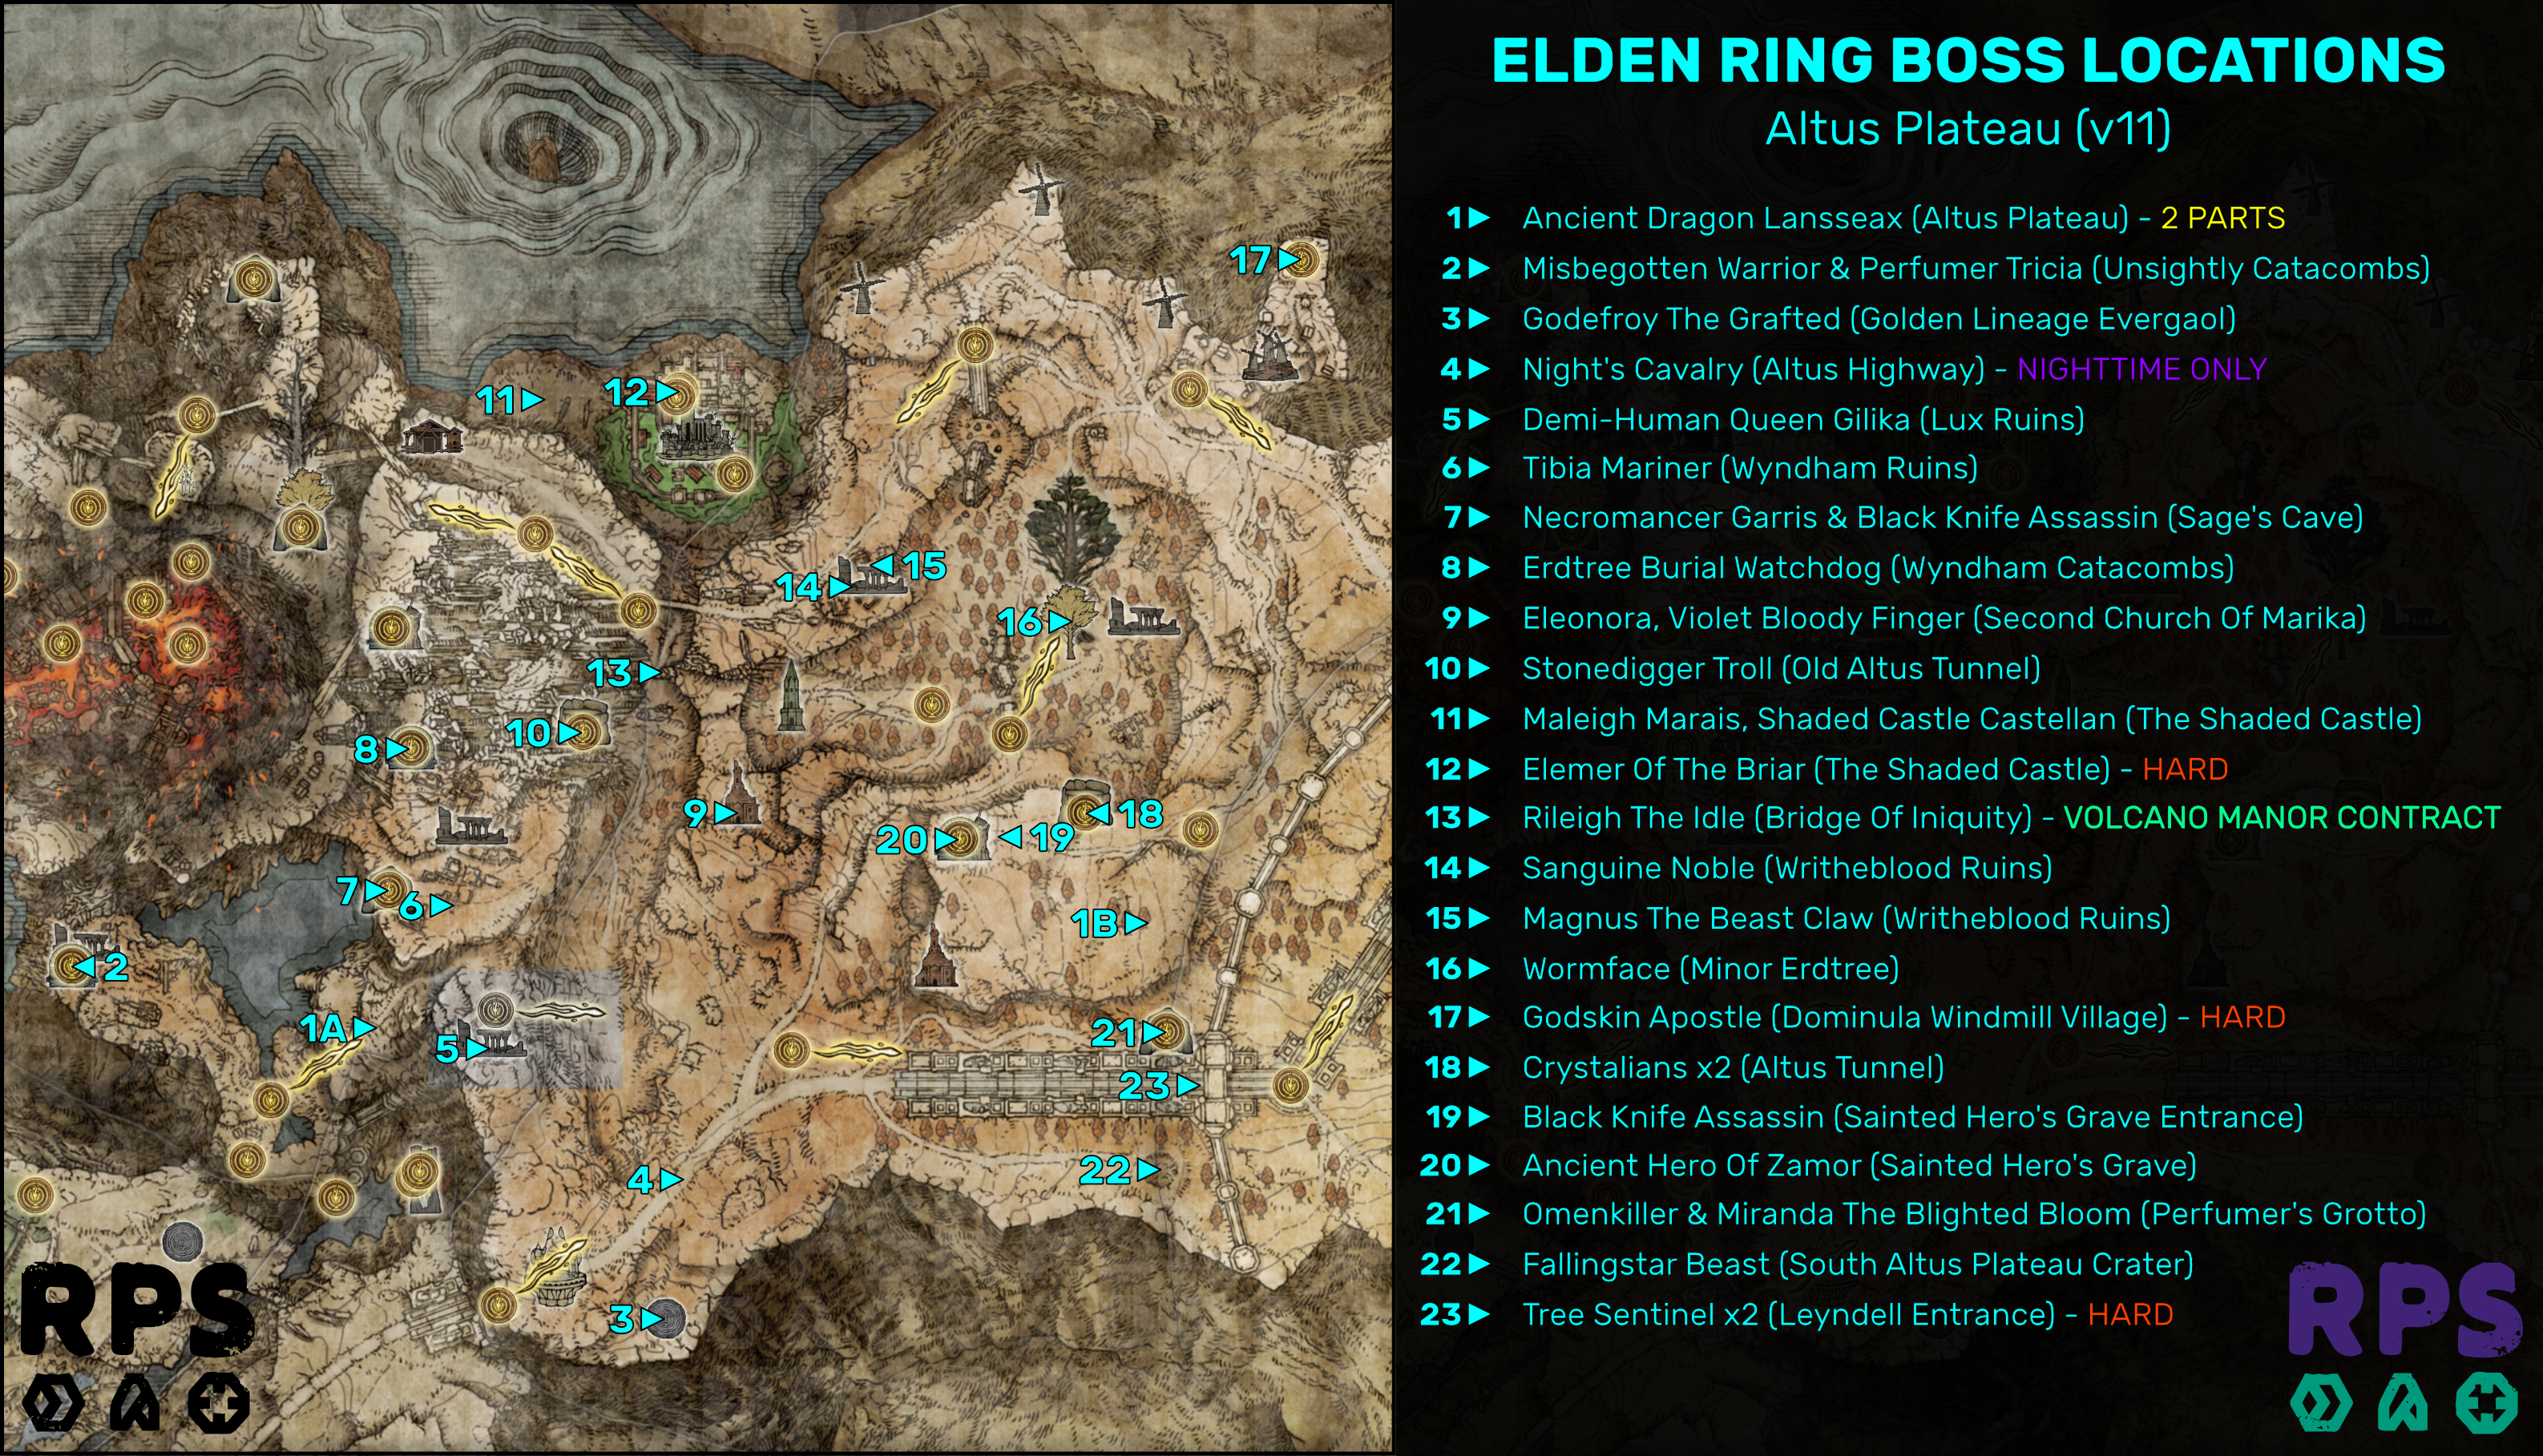 Tibia Mariner (Summonwater Village) Boss Fight - Elden Ring (PS4) 